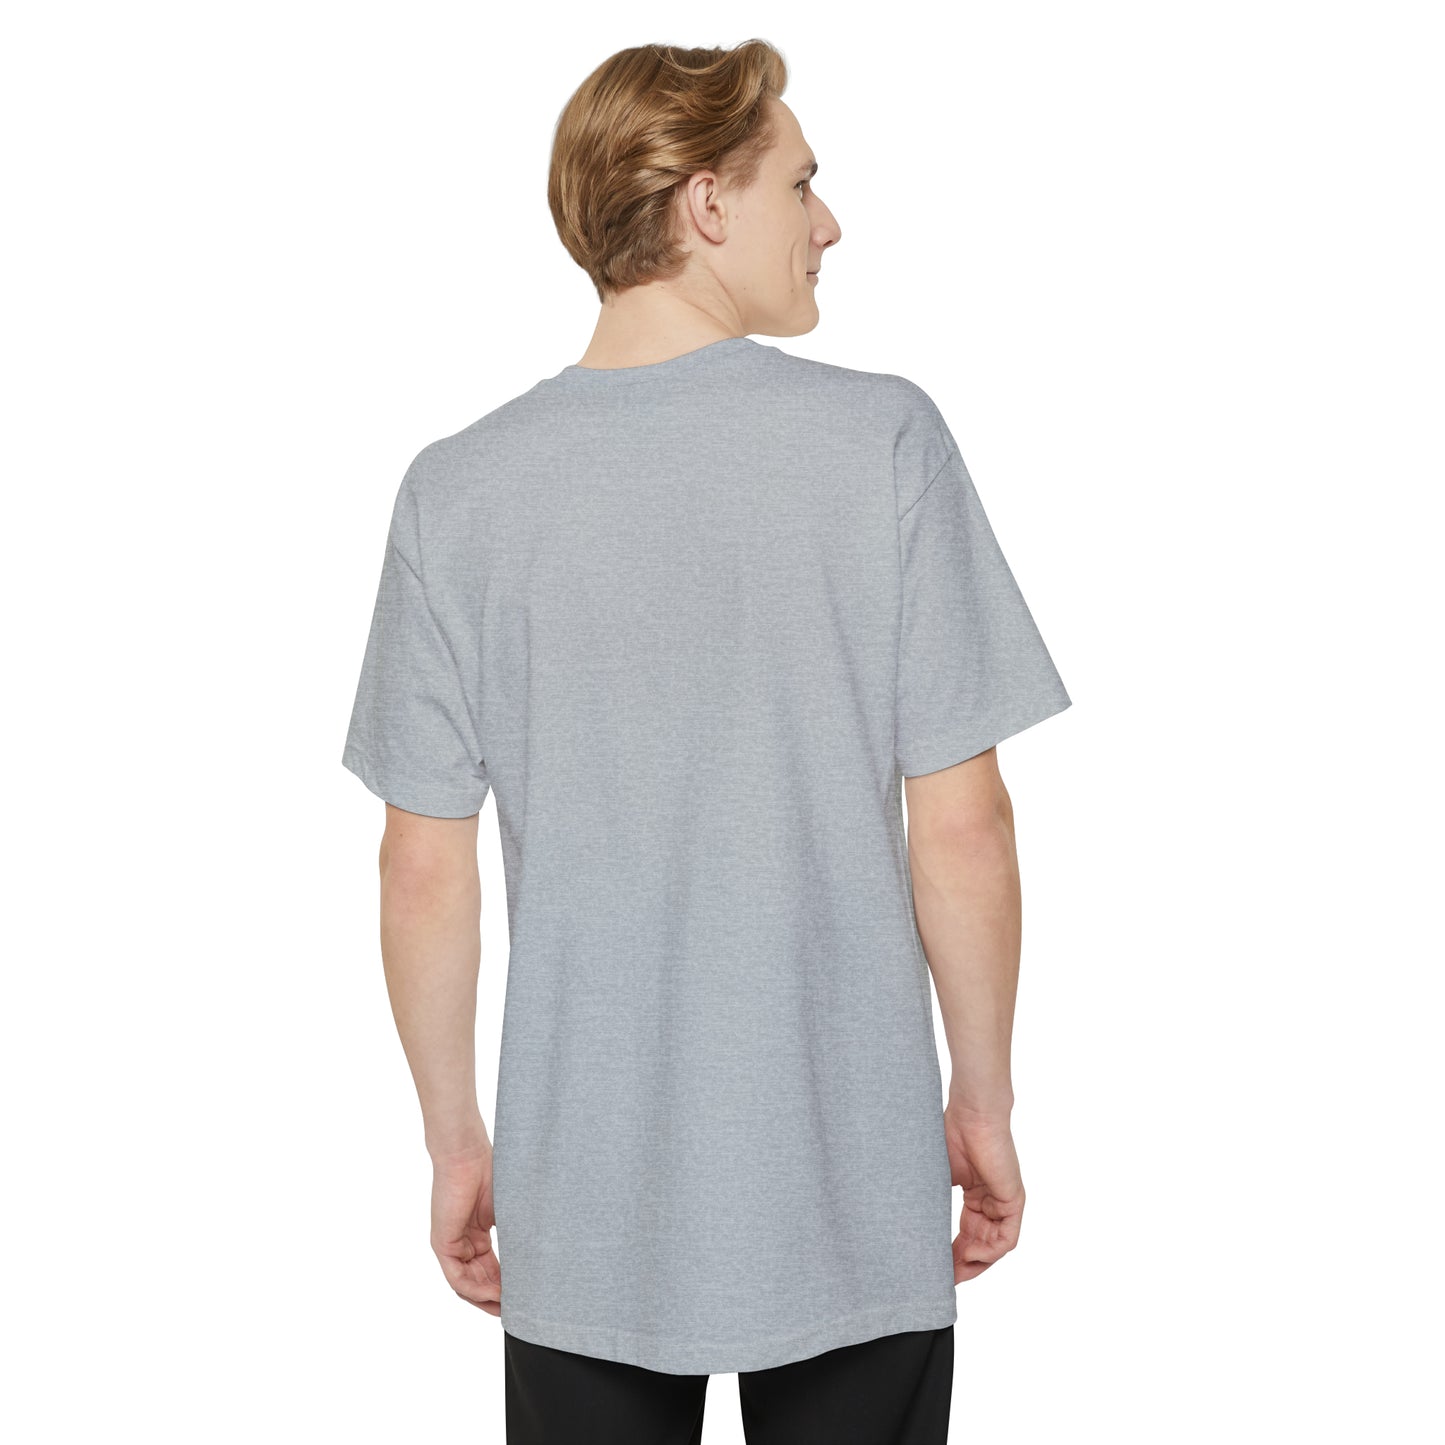 Michael's Fish Room - Unisex Tall Beefy-T® T-Shirt